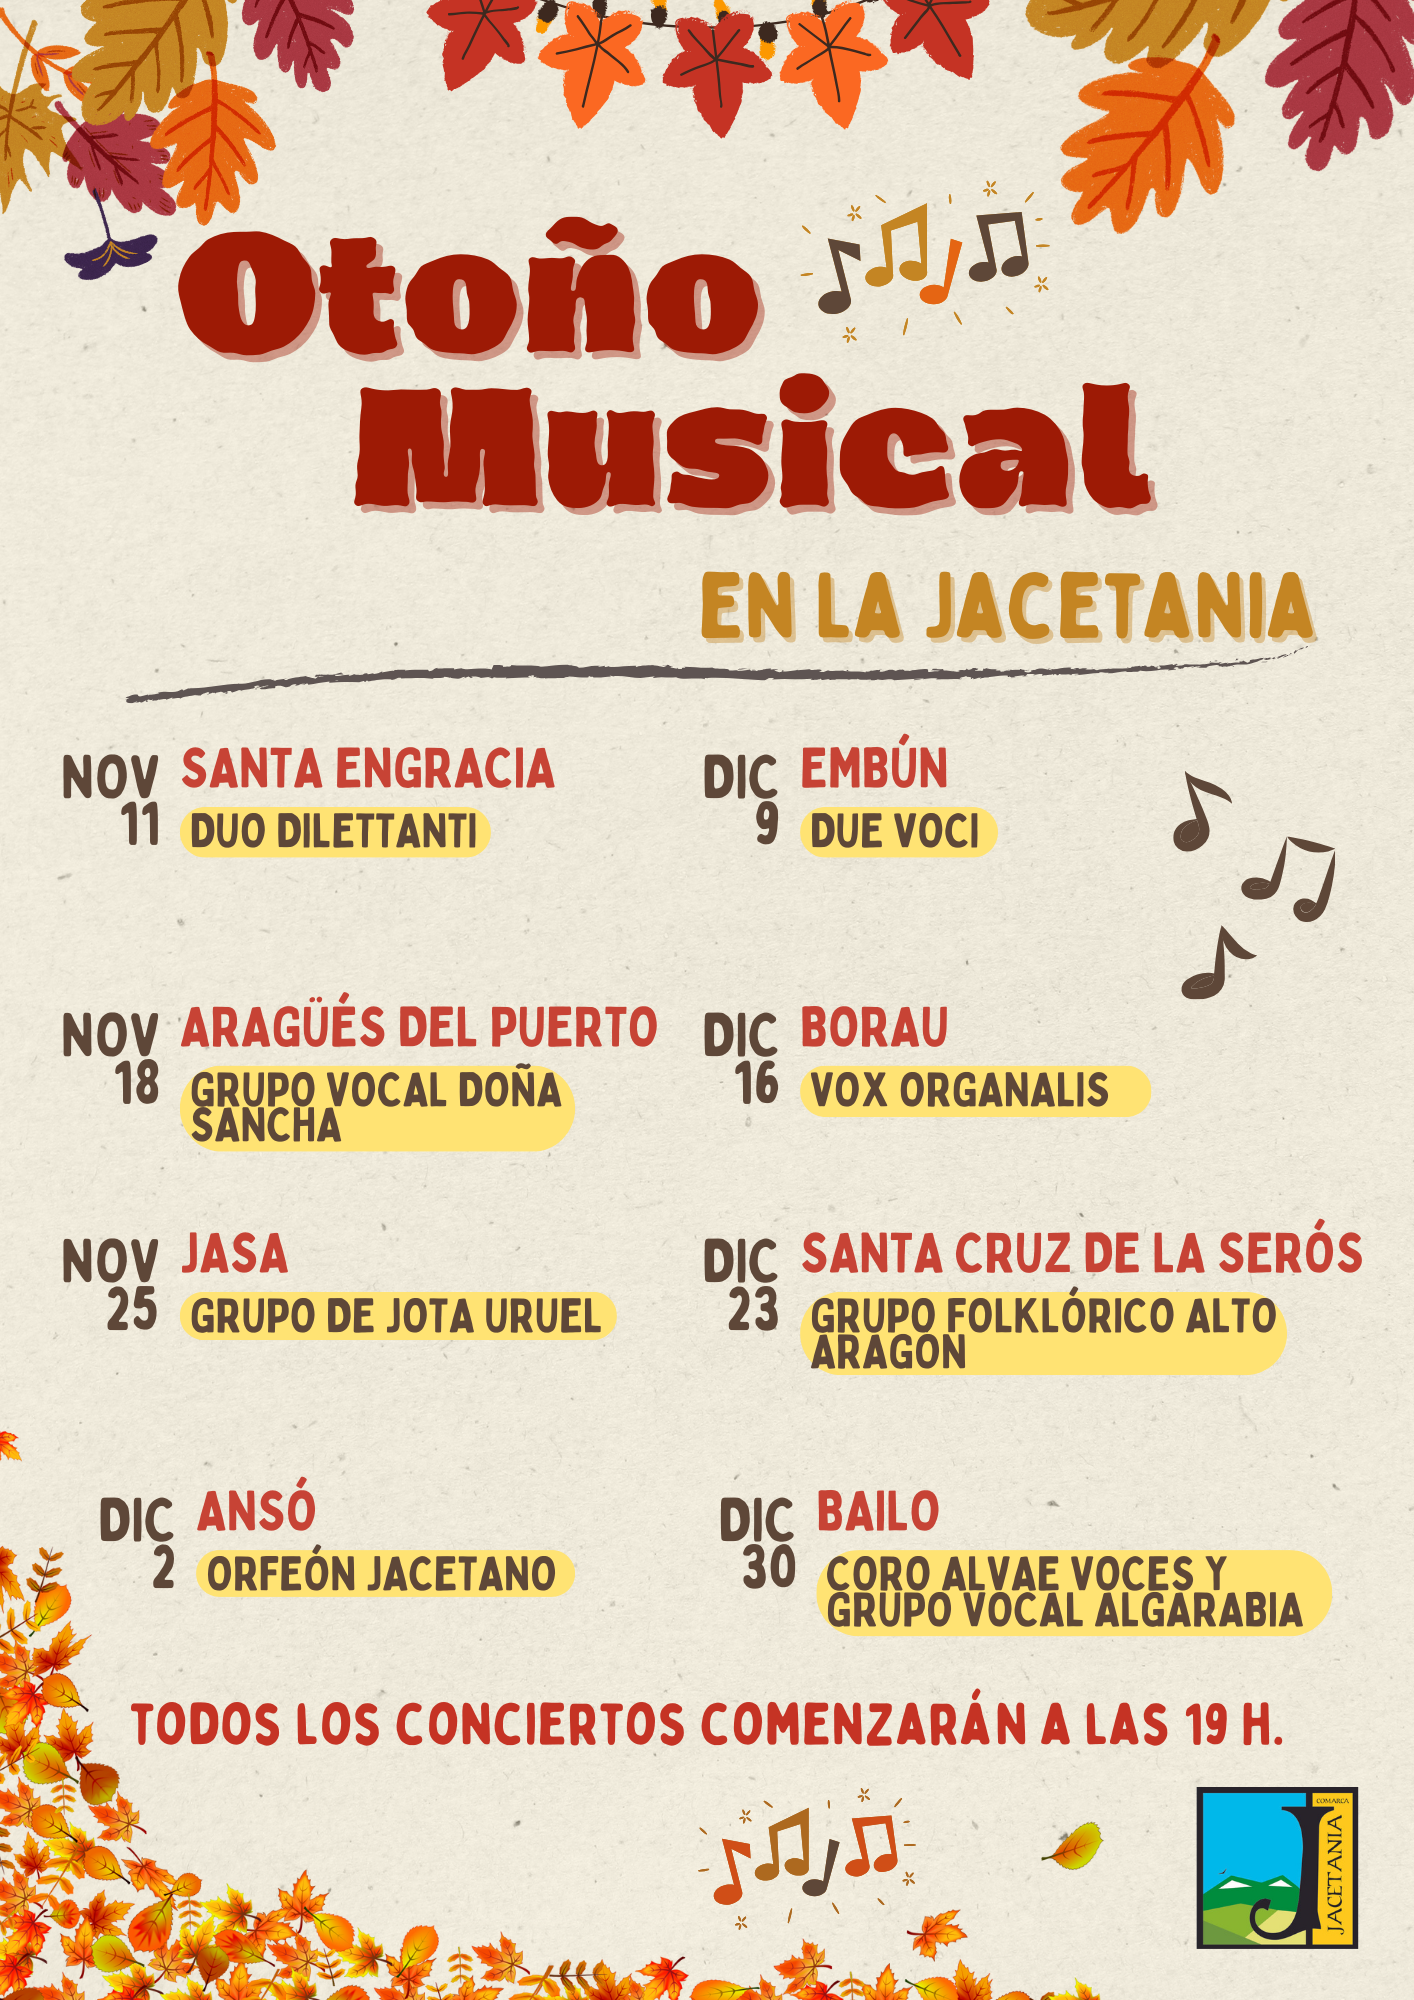 Otoño Musical en La Jacetania